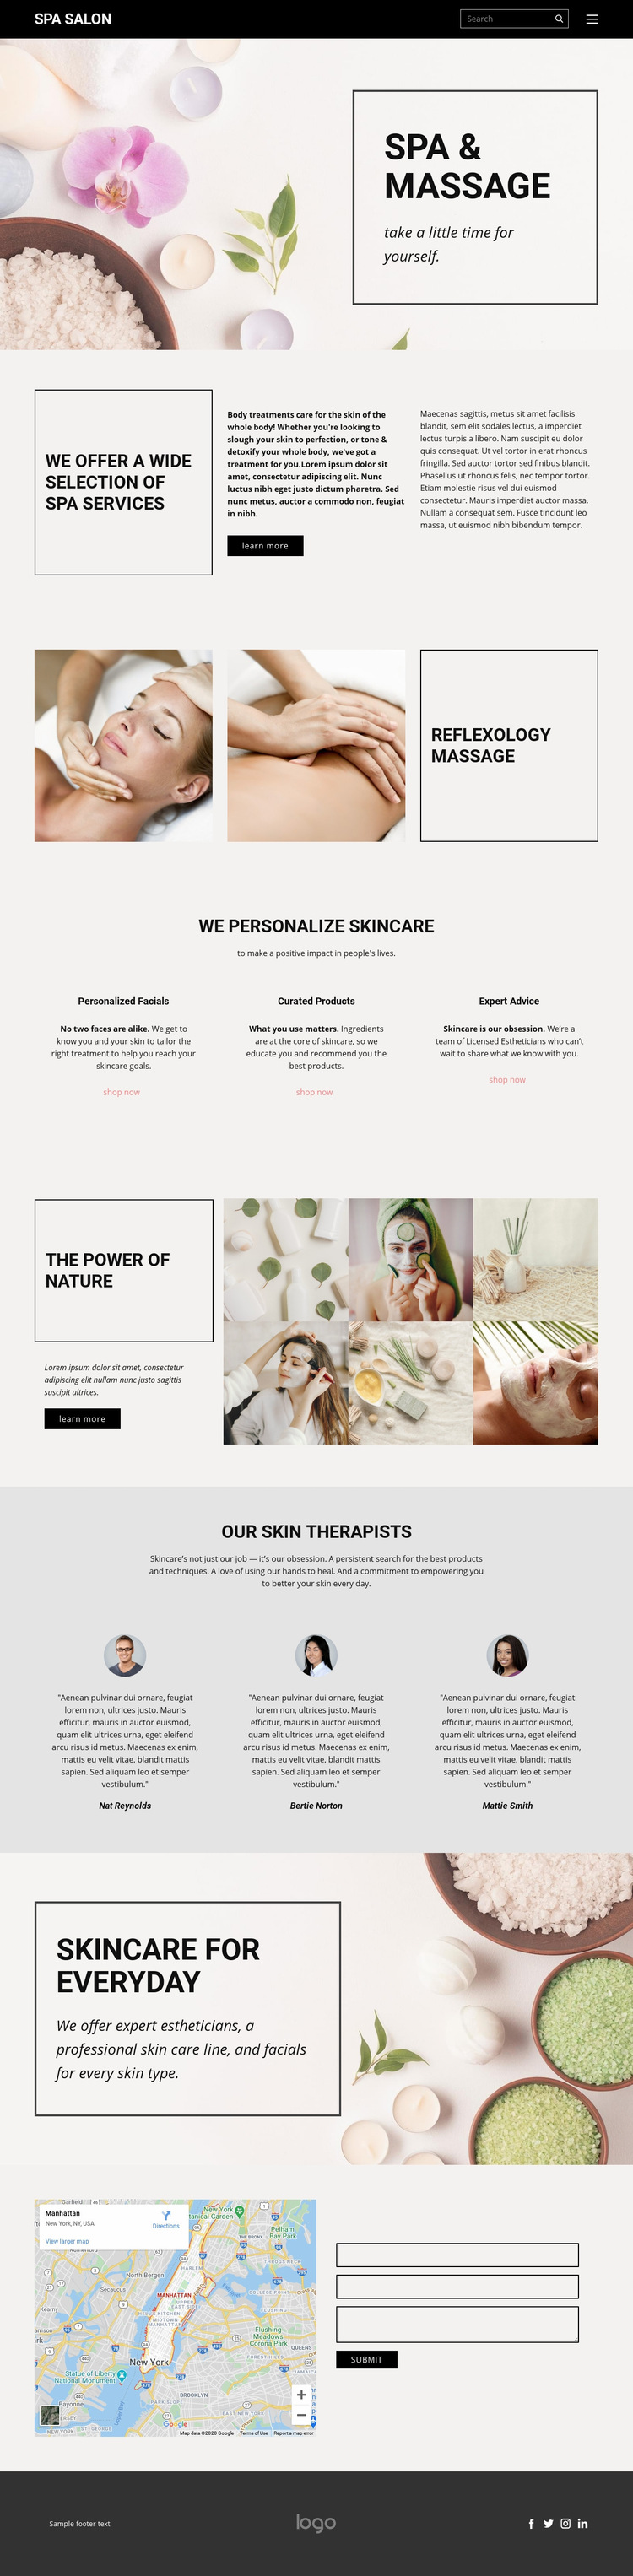 SPA and massage Web Page Design